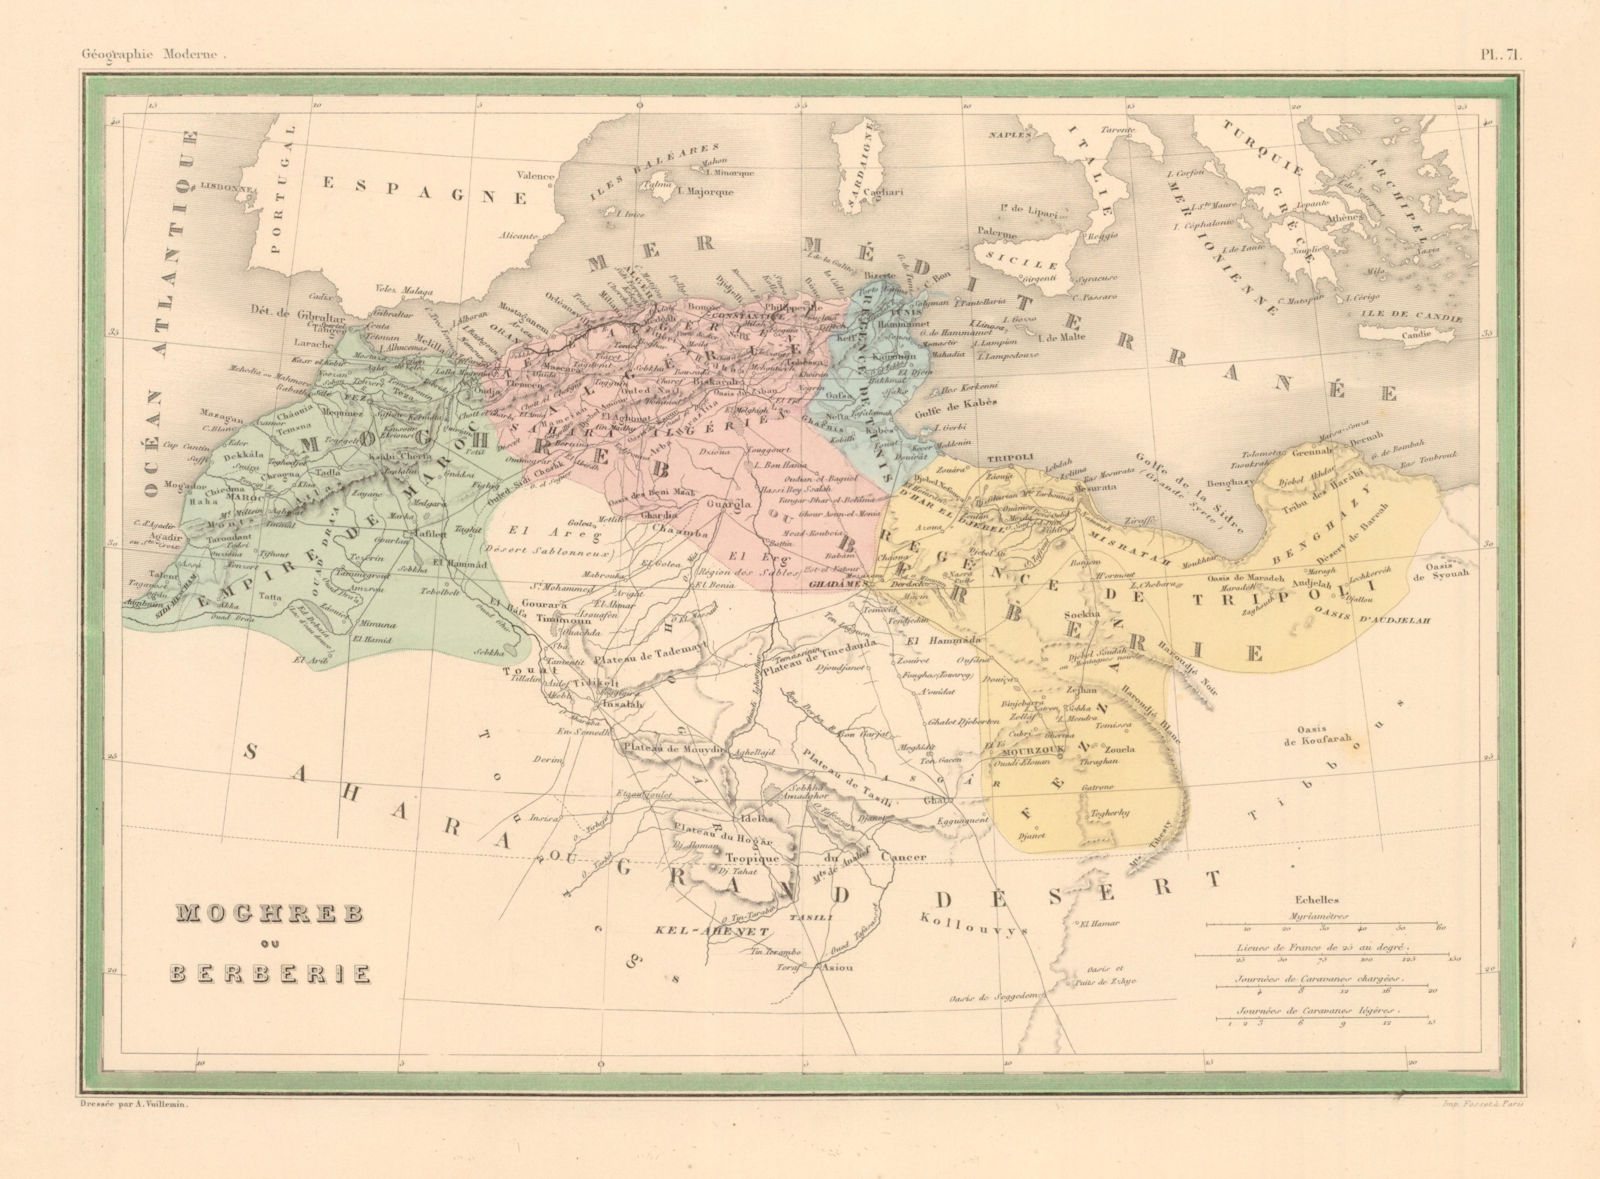 'Moghreb ou Berberie' by Malte-Brun. North Africa Maghreb Morocco c1862 map